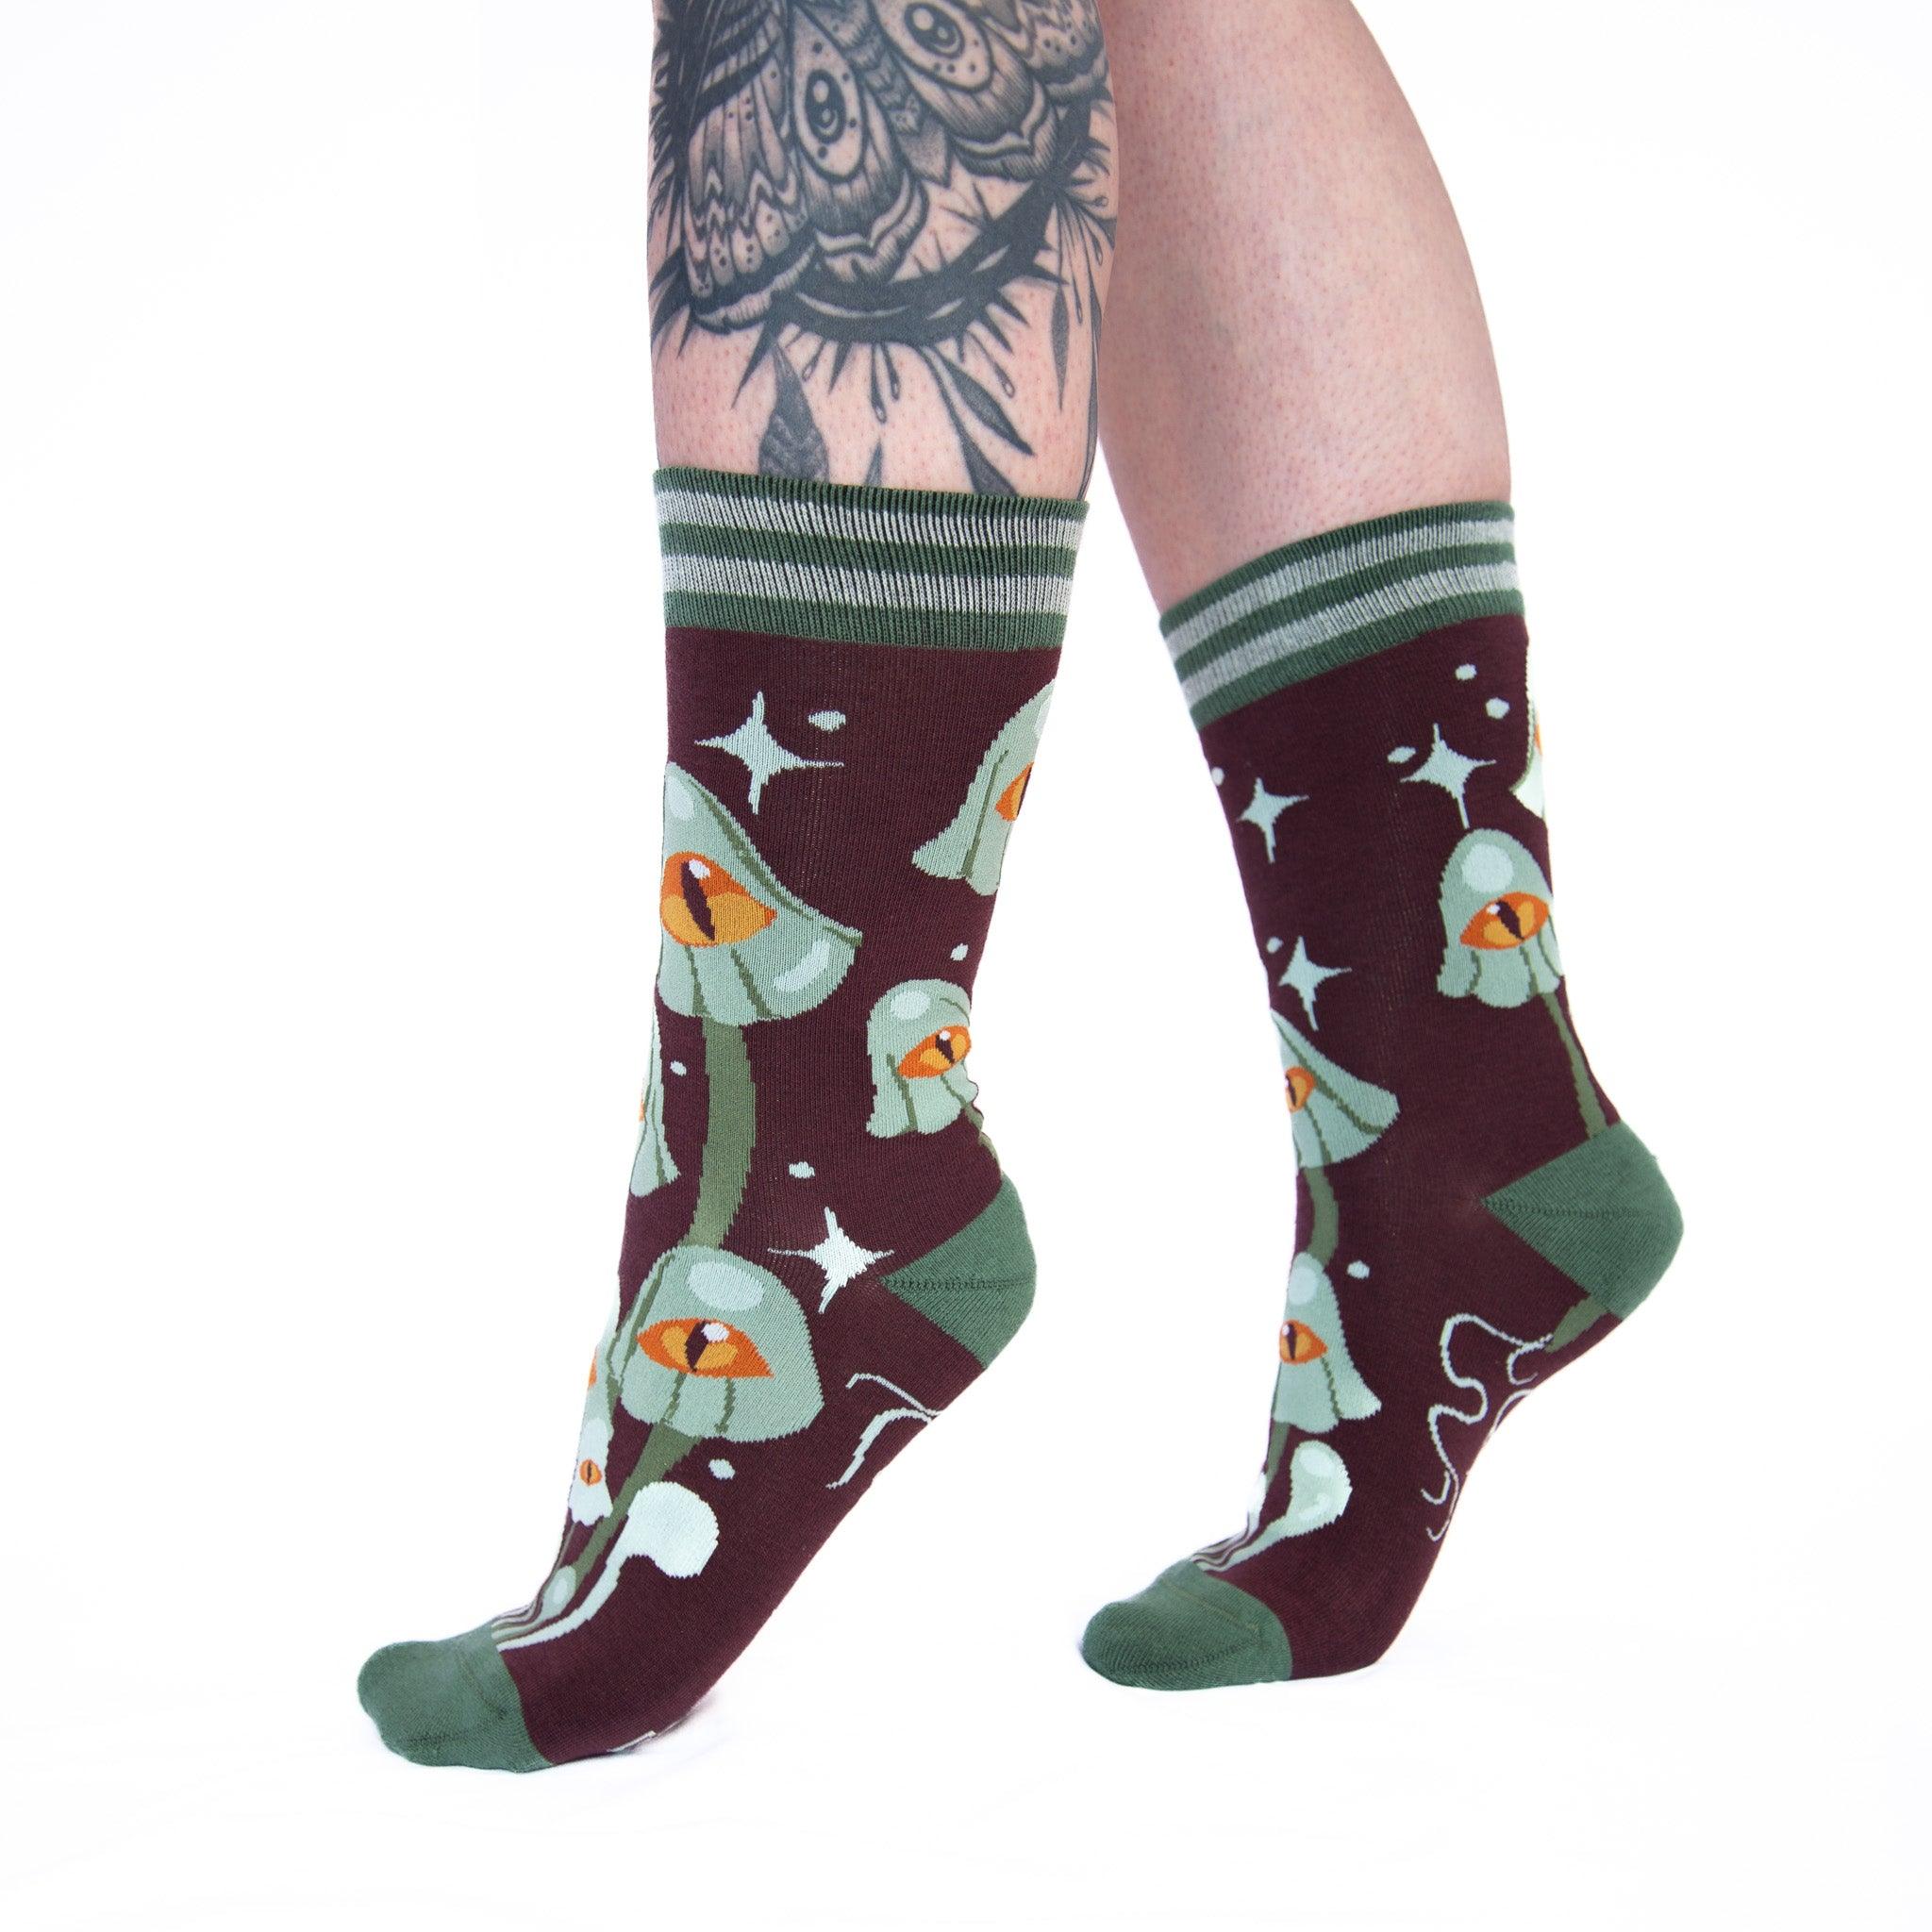 Mystic Mushrooms Crew Socks - FootClothes